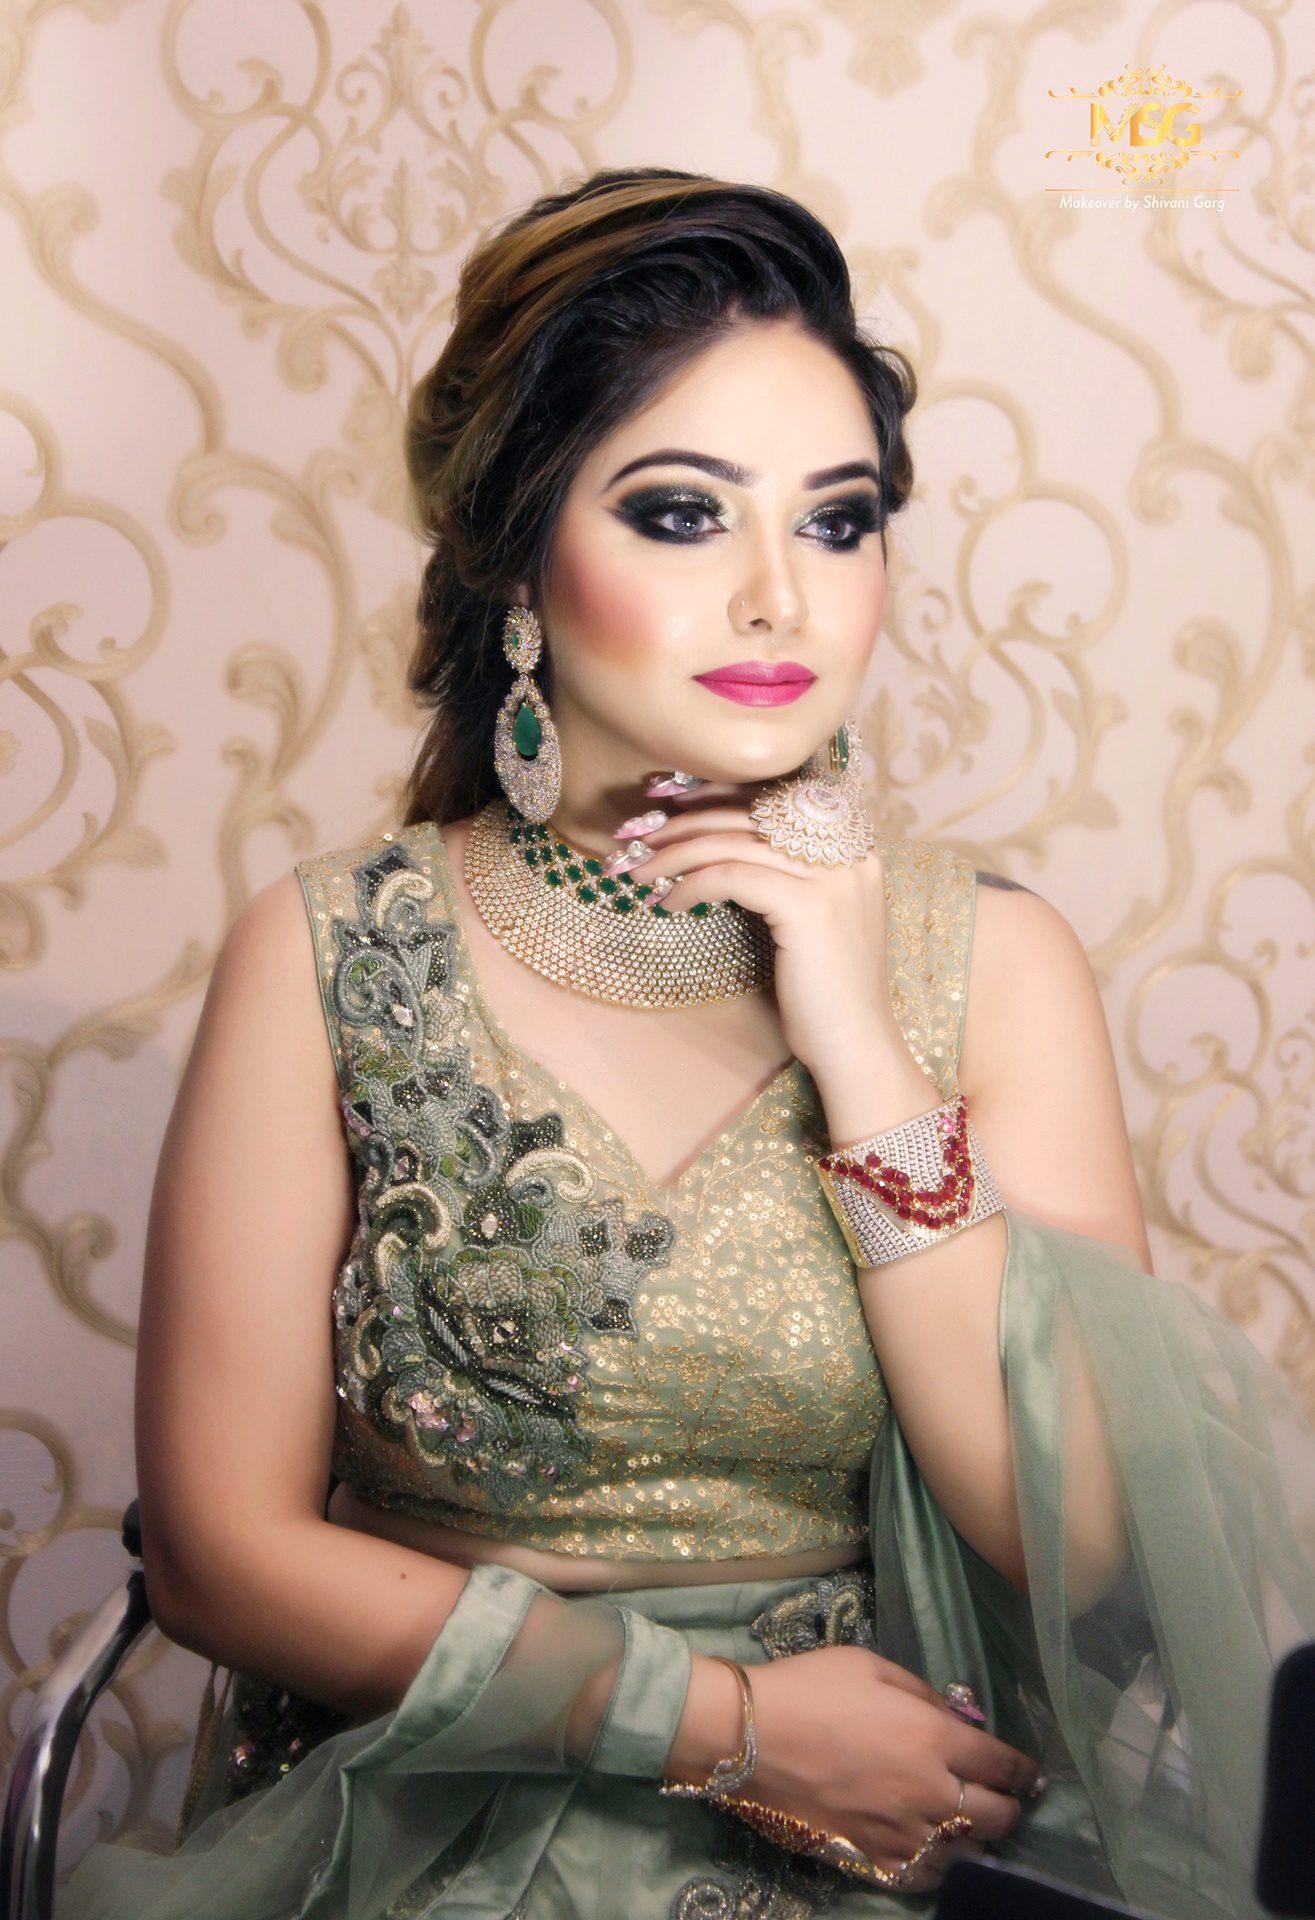 Best Engagement/Occasion Makeup Ideas & Images By Shivani Garg